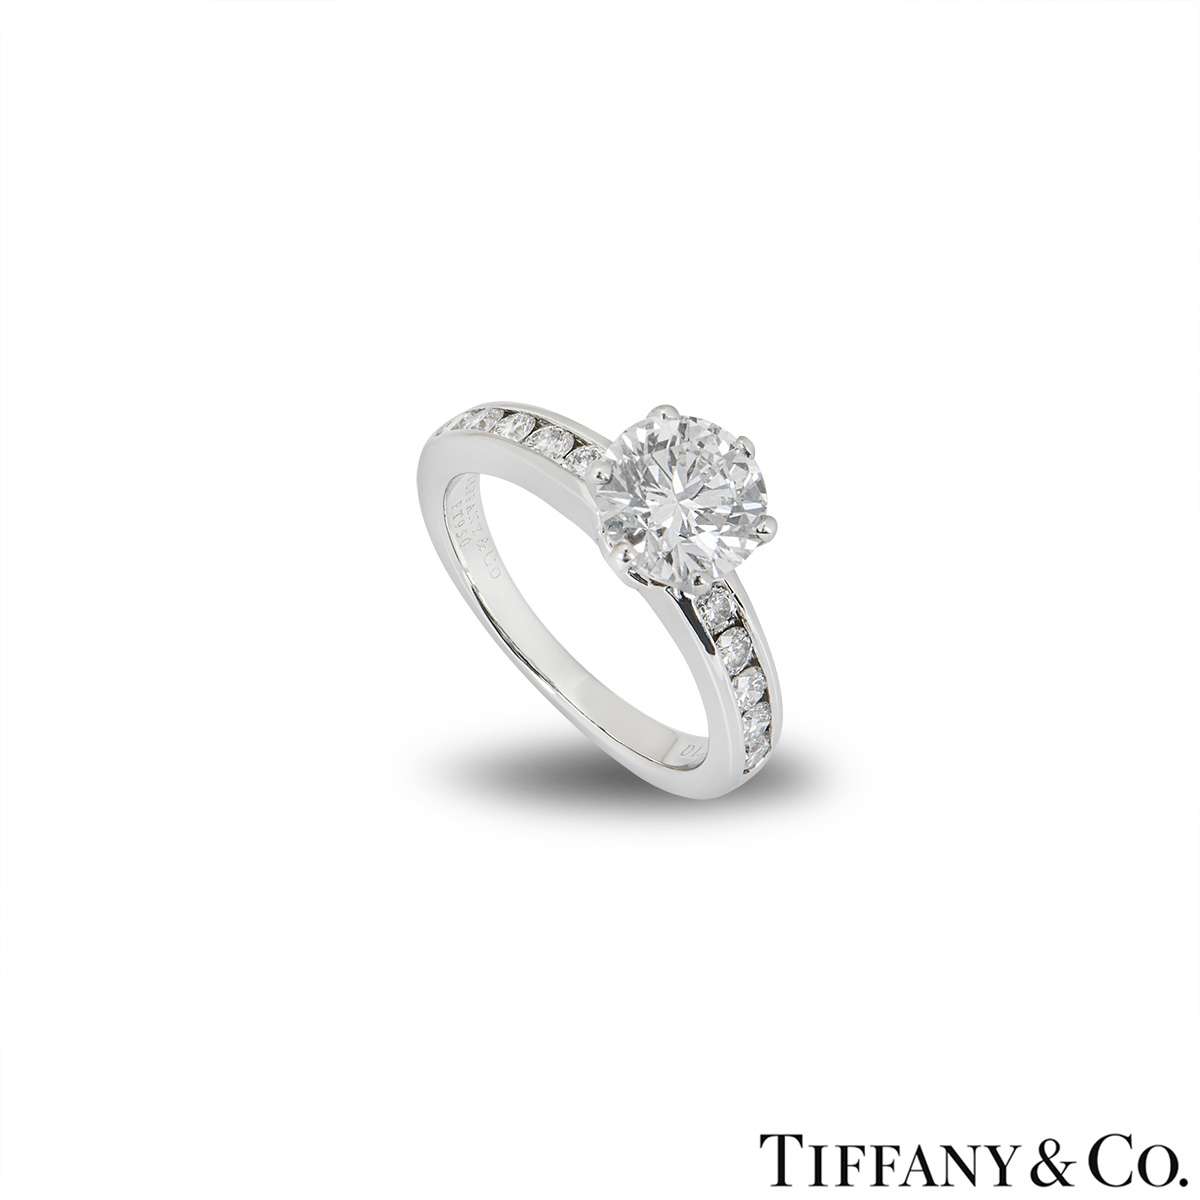 Tiffany & Co. Platinum Round Brilliant Cut Diamond Ring 1.28ct G/VVS2